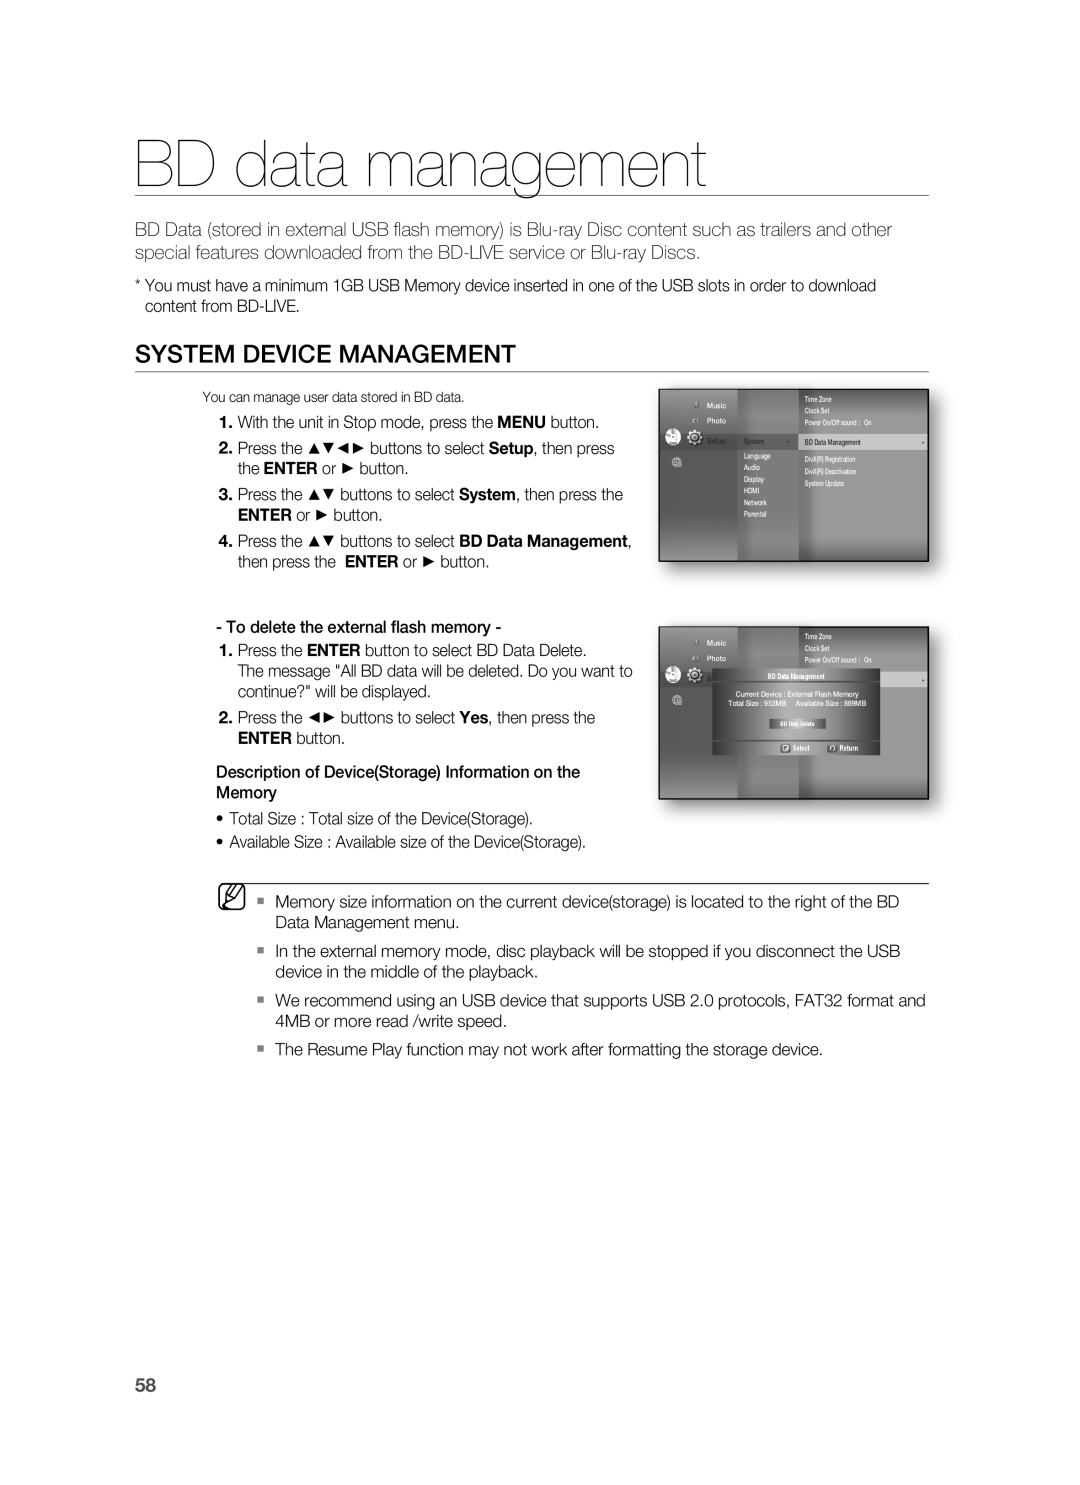 Samsung AH68-02231A, HT-BD3252A user manual BD data management, System Device Management 